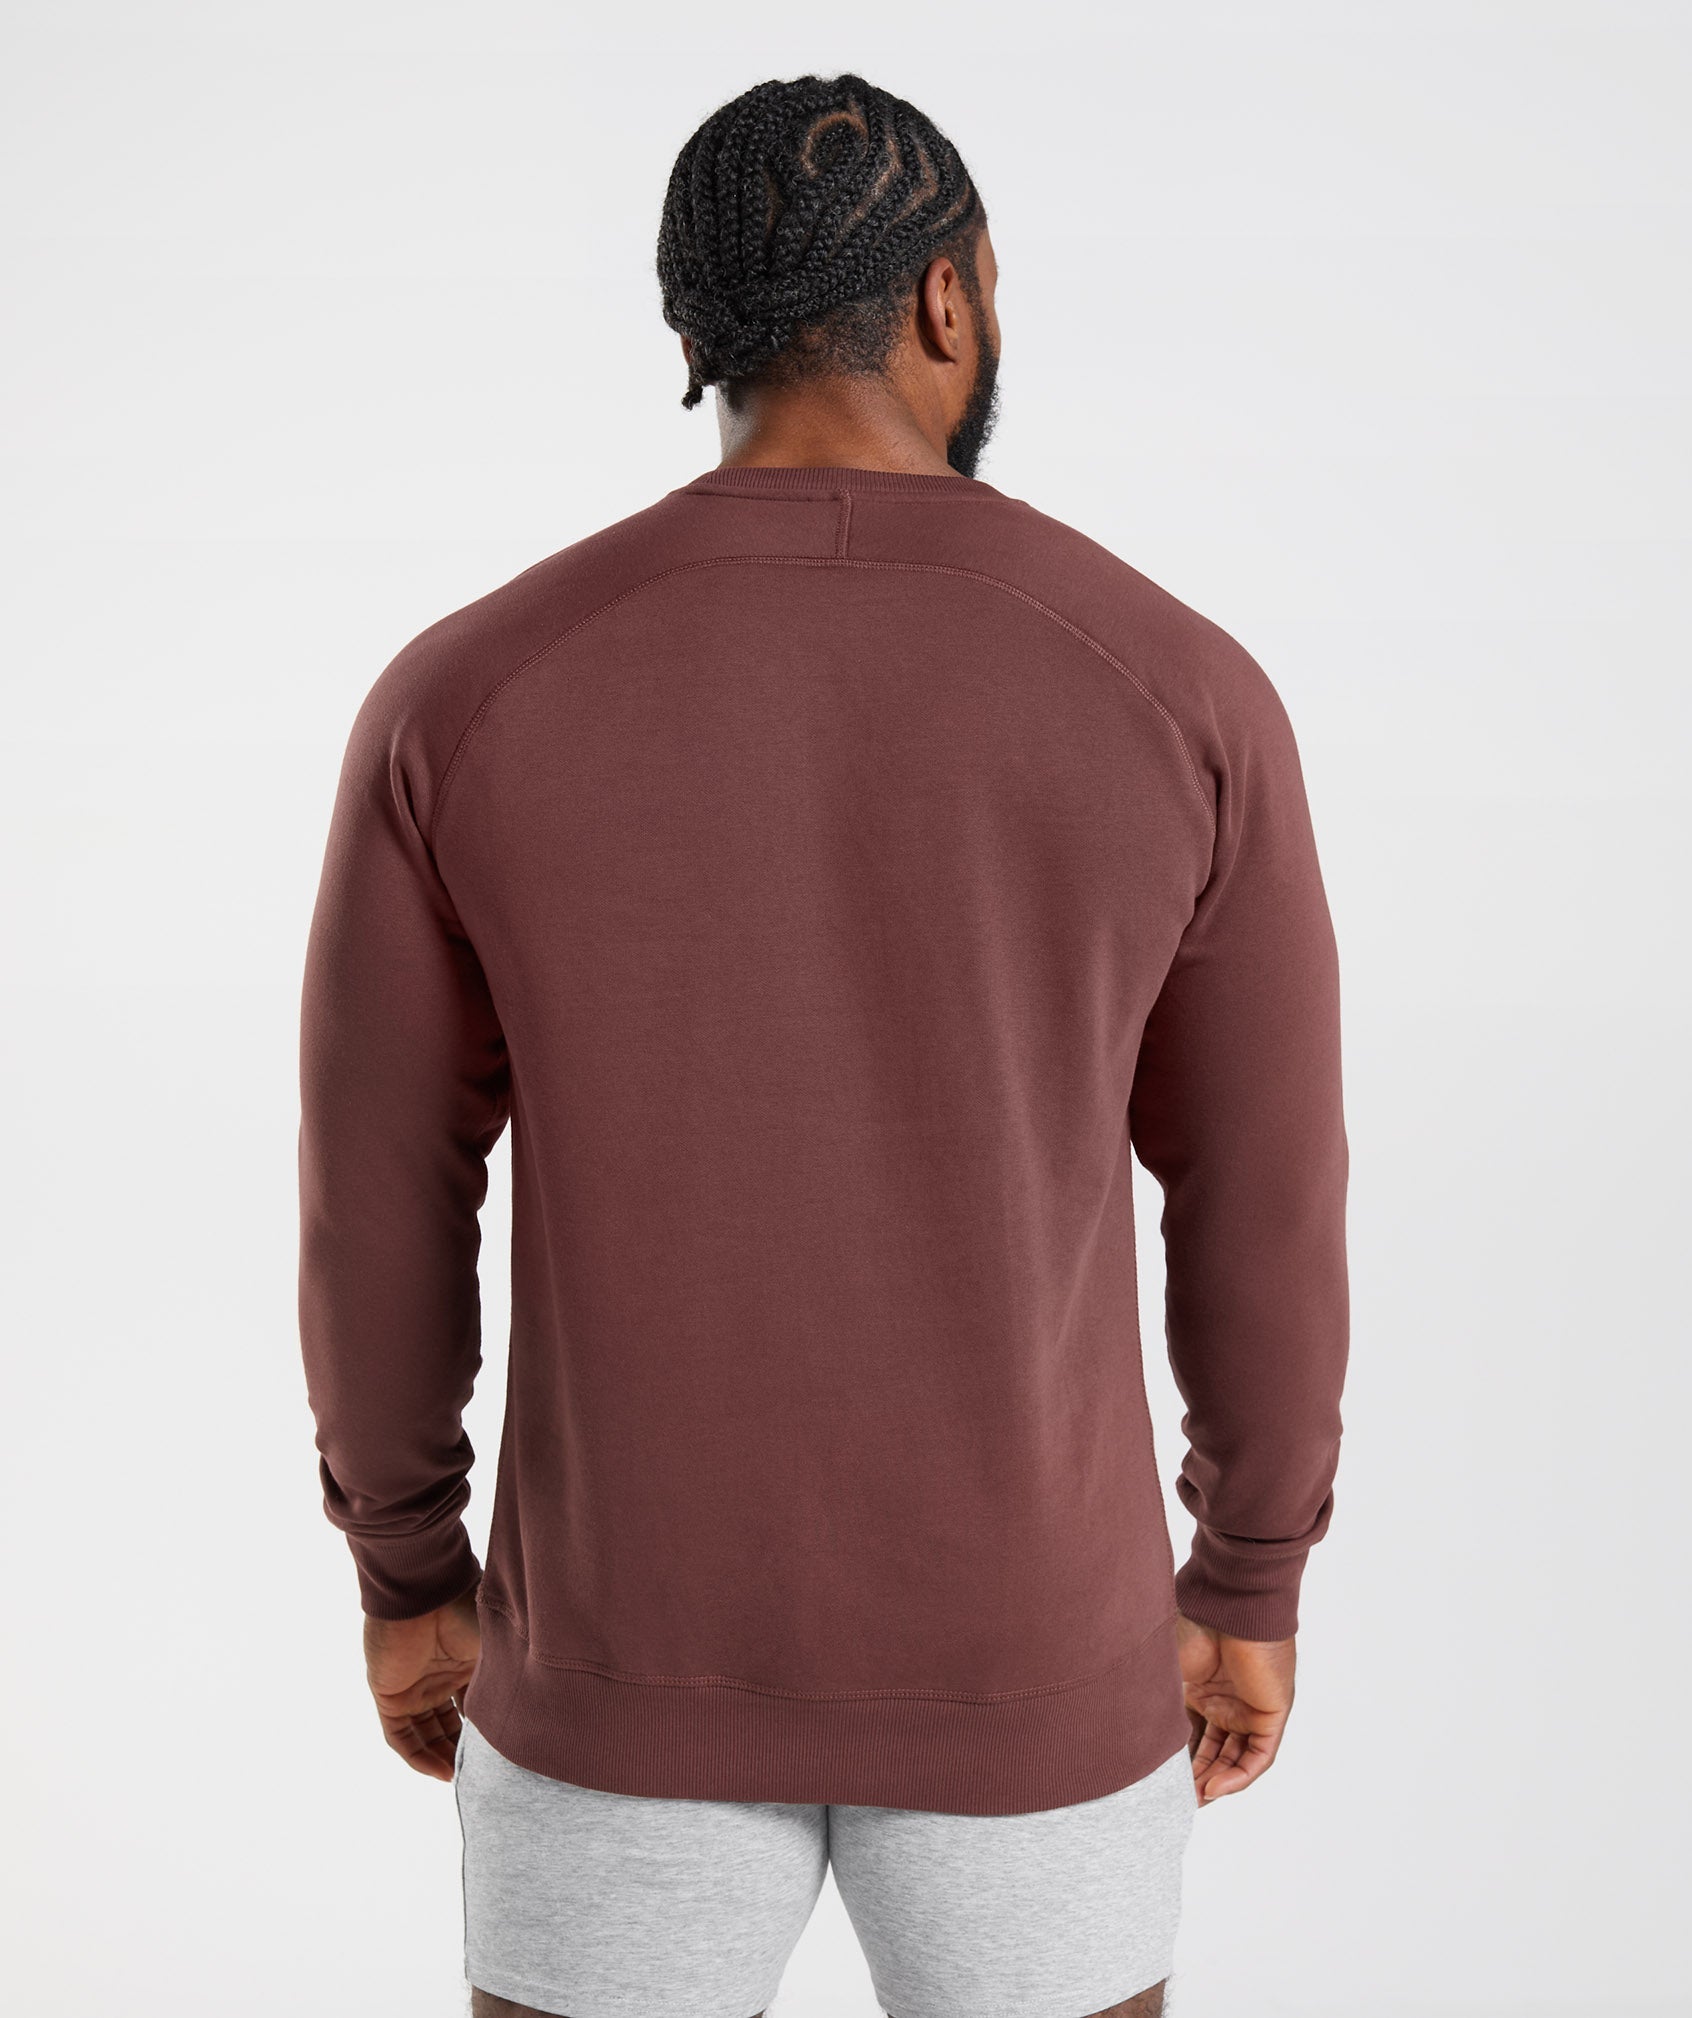 Crest Sweatshirt in Cherry Brown - view 2